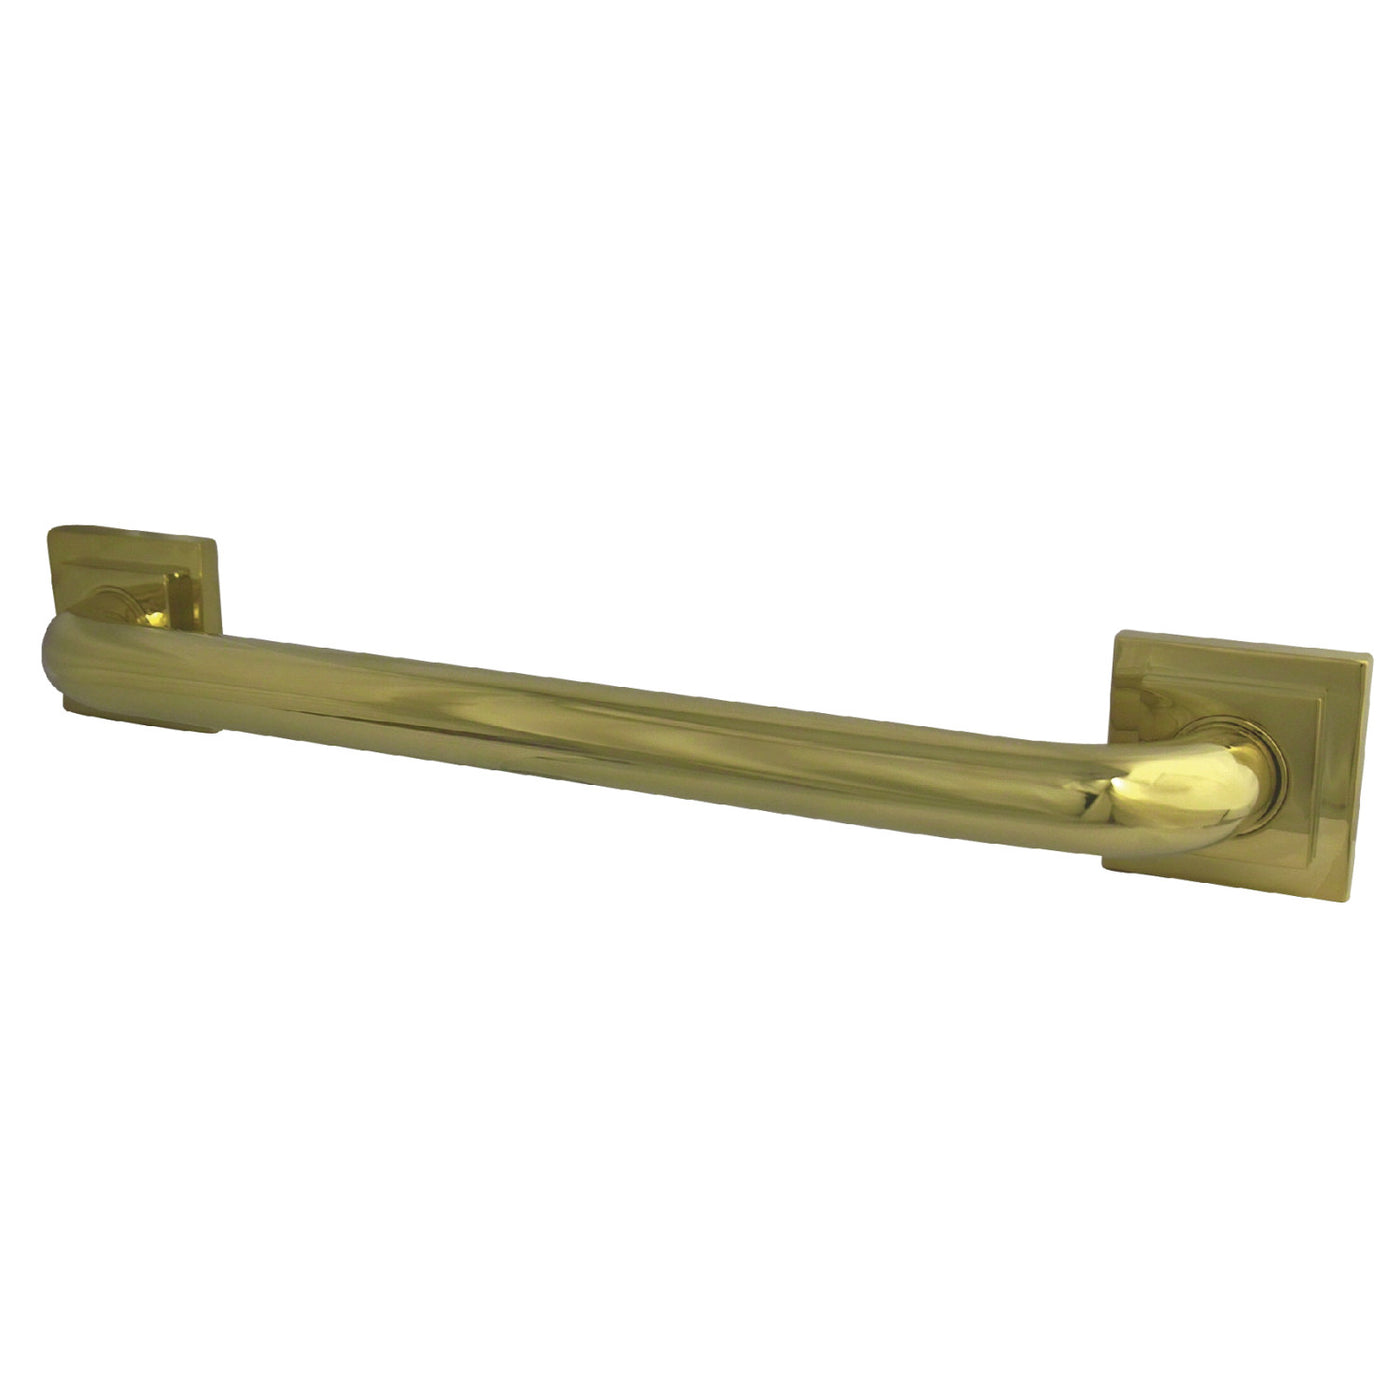 Elements of Design EDR614122 12-Inch x 1-1/4-Inch O.D Grab Bar, Polished Brass